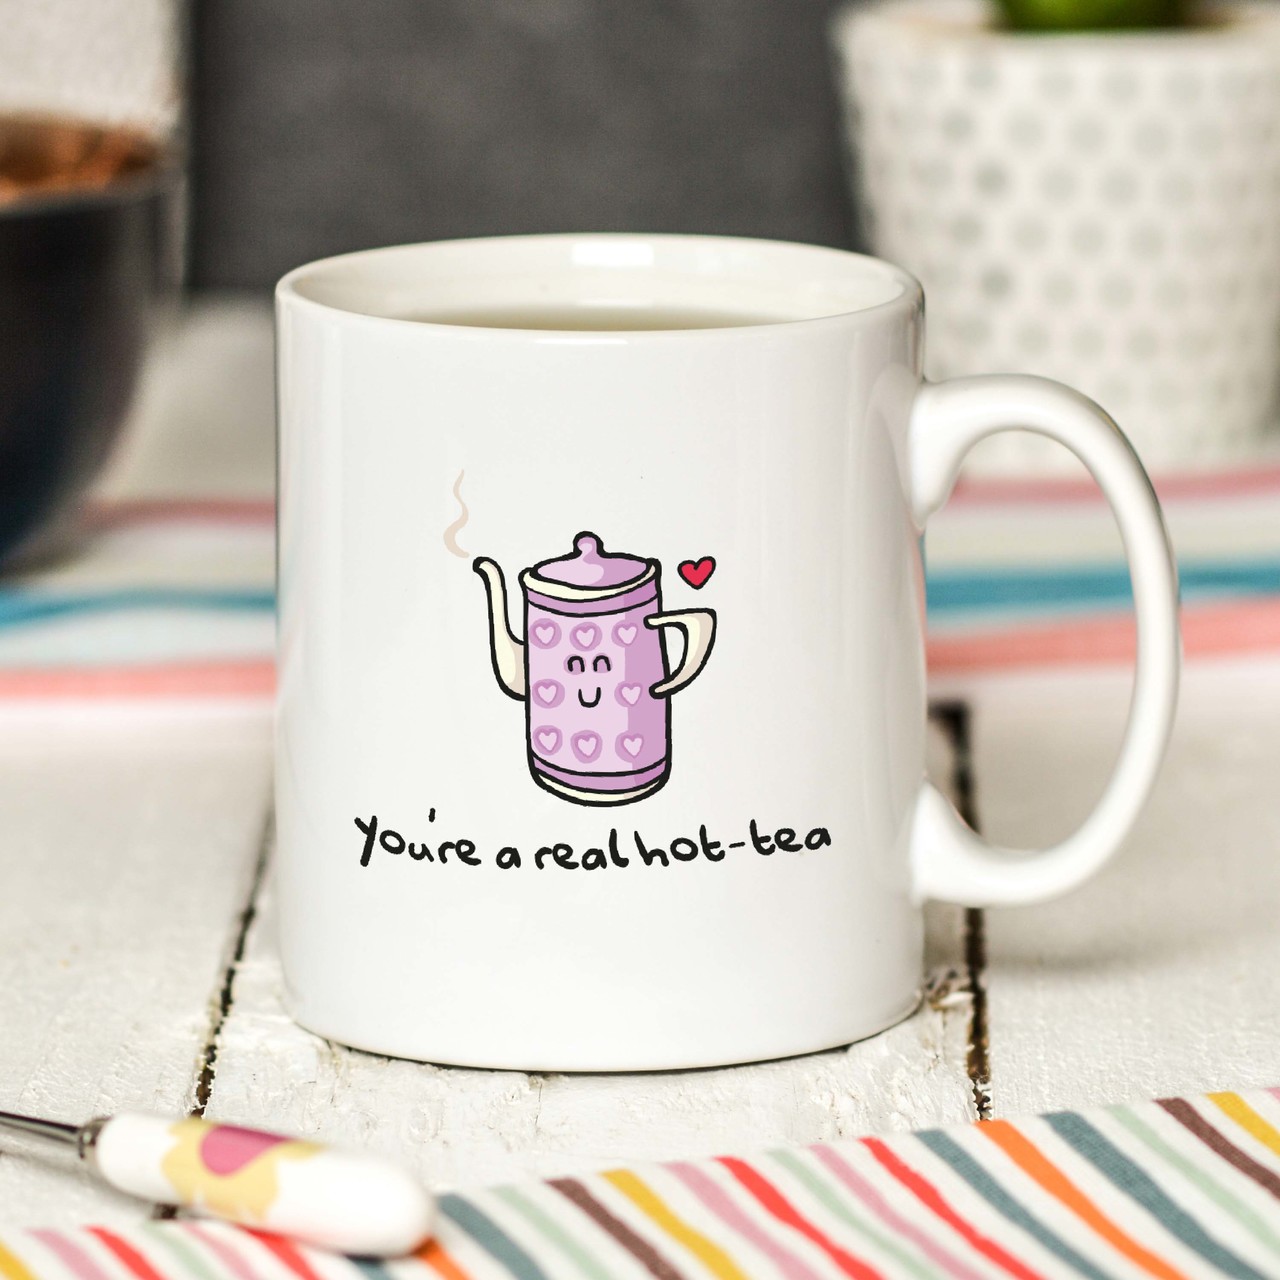 You’re a real hot-tea Mug